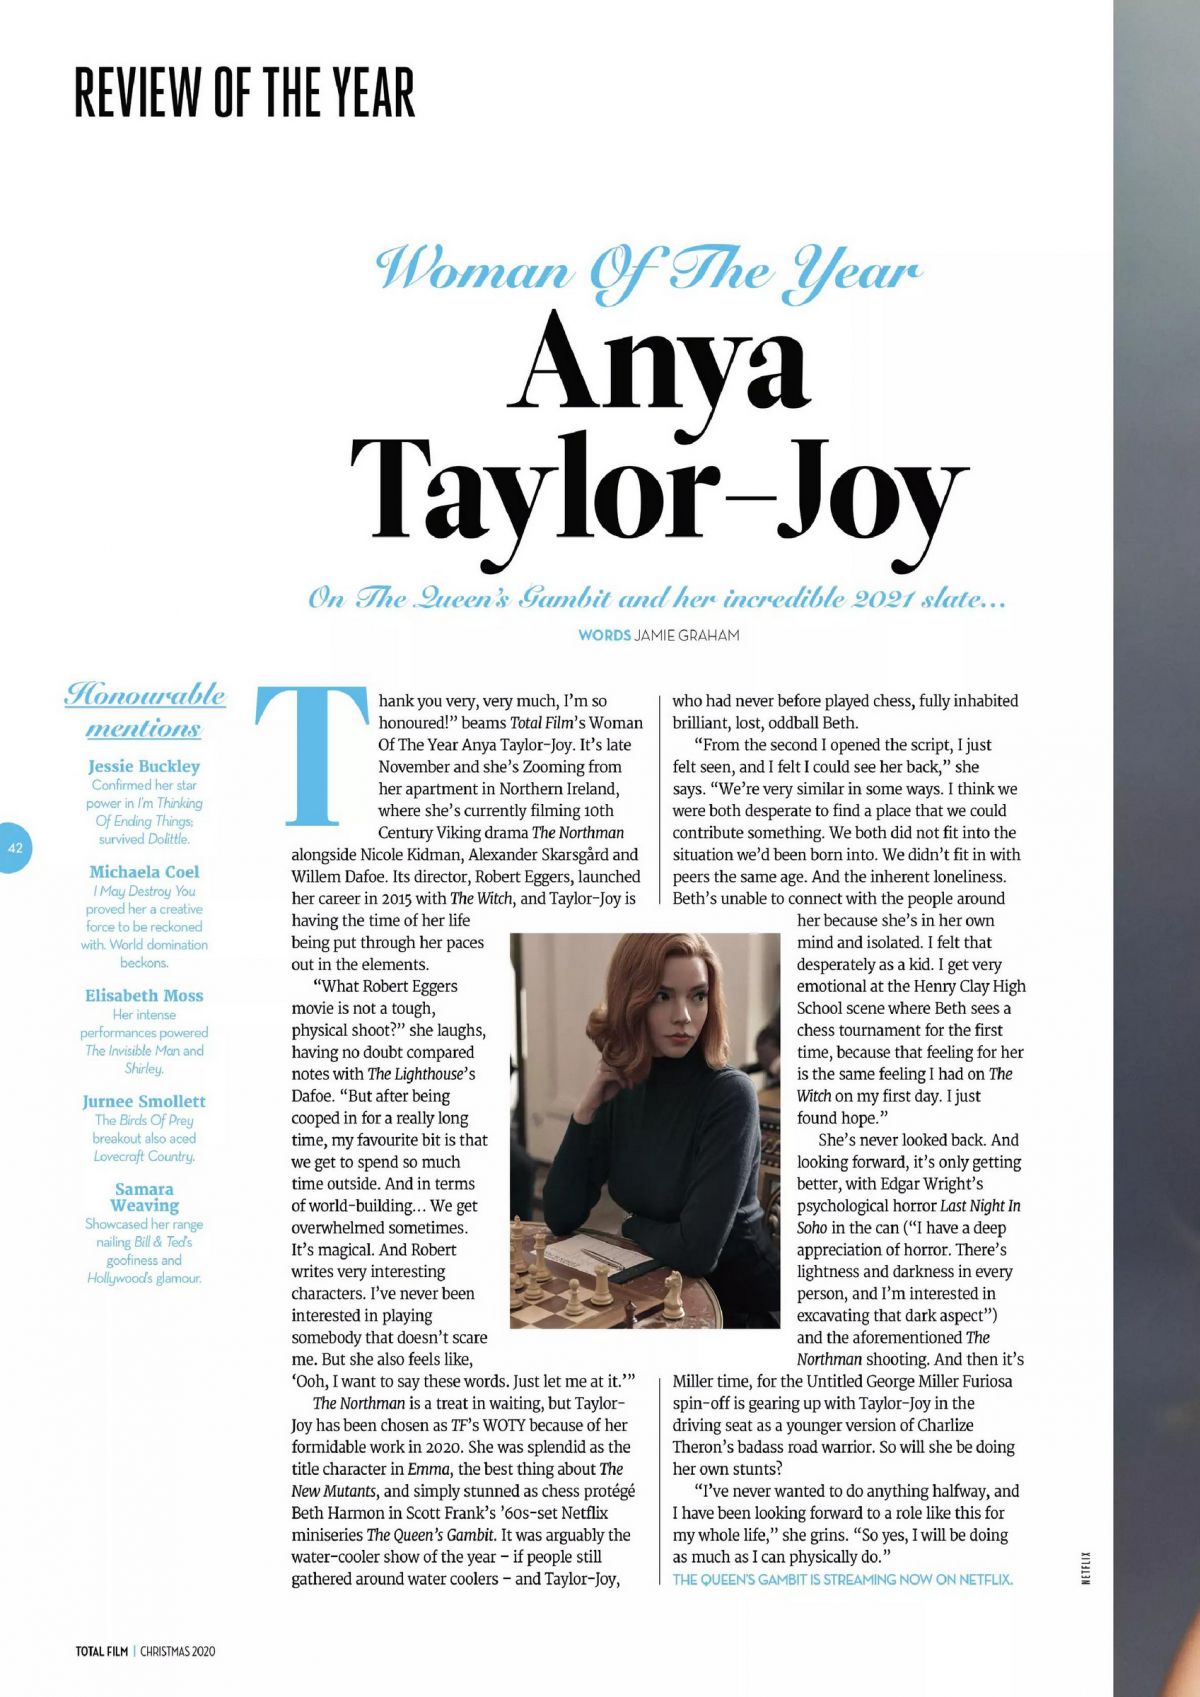 anya-taylor-joy-in-total-film-magazine-christmas-2020-0.jpg